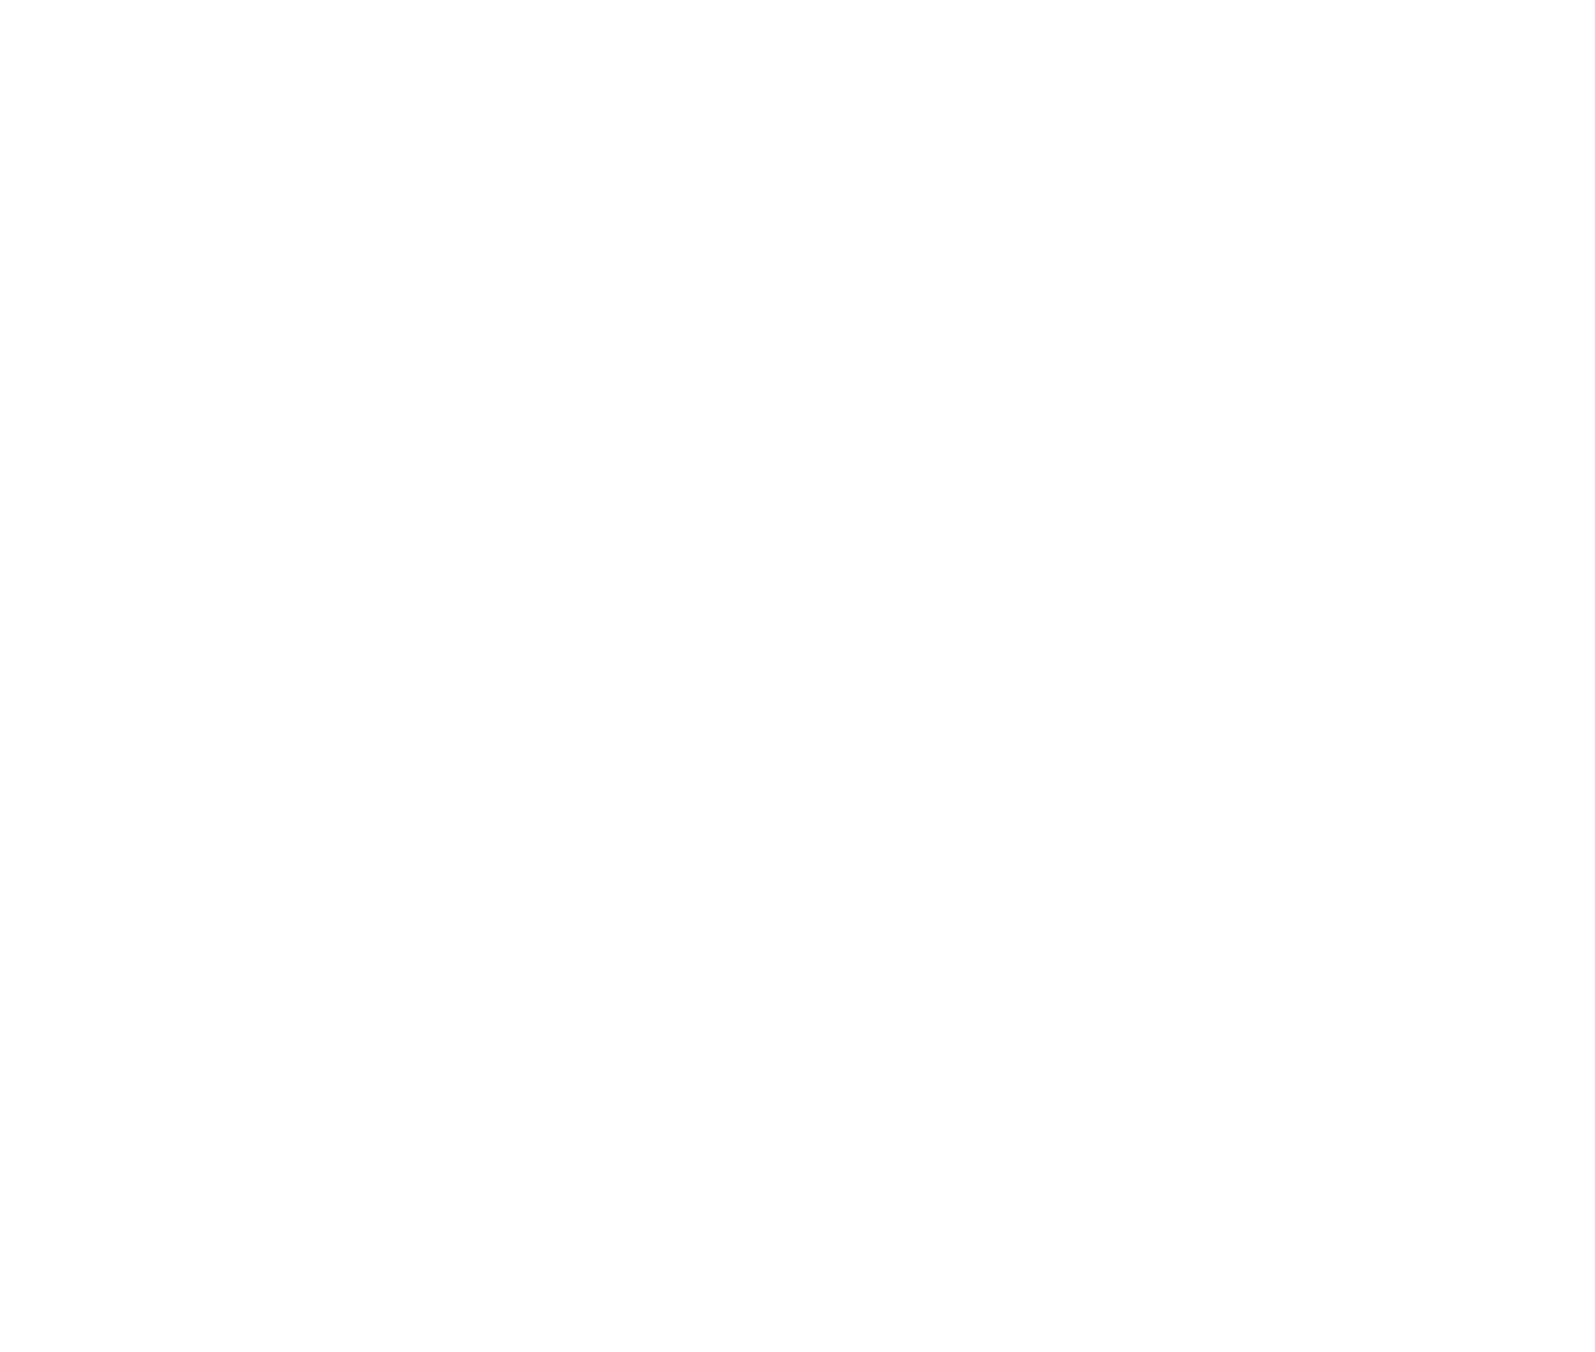 Placoplatre logo for dark backgrounds (transparent PNG)